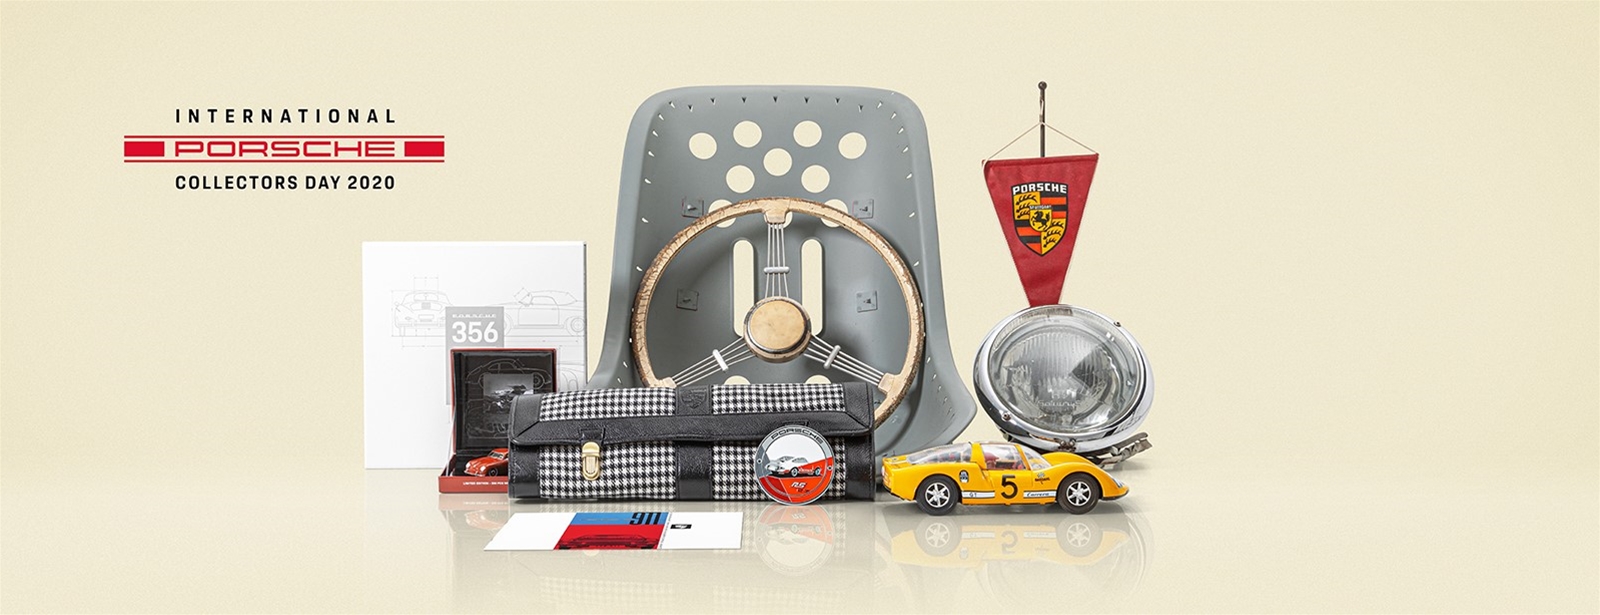 The International Porsche Collectors 